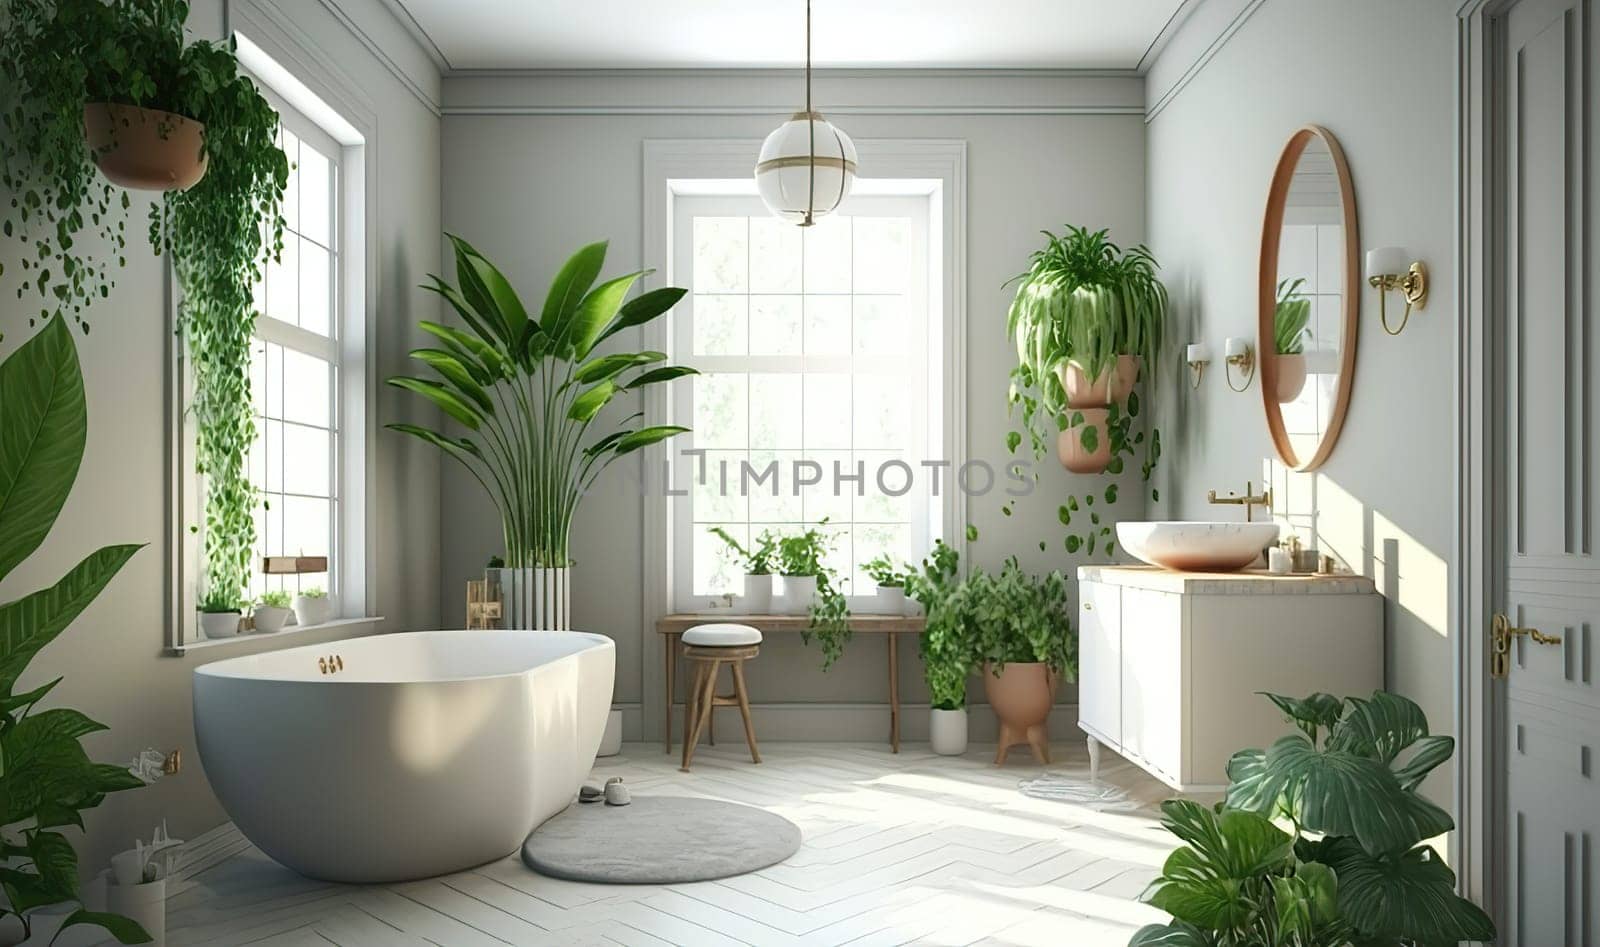 Stylish interior of bathroom with green houseplants, mirror and window by Jyliana